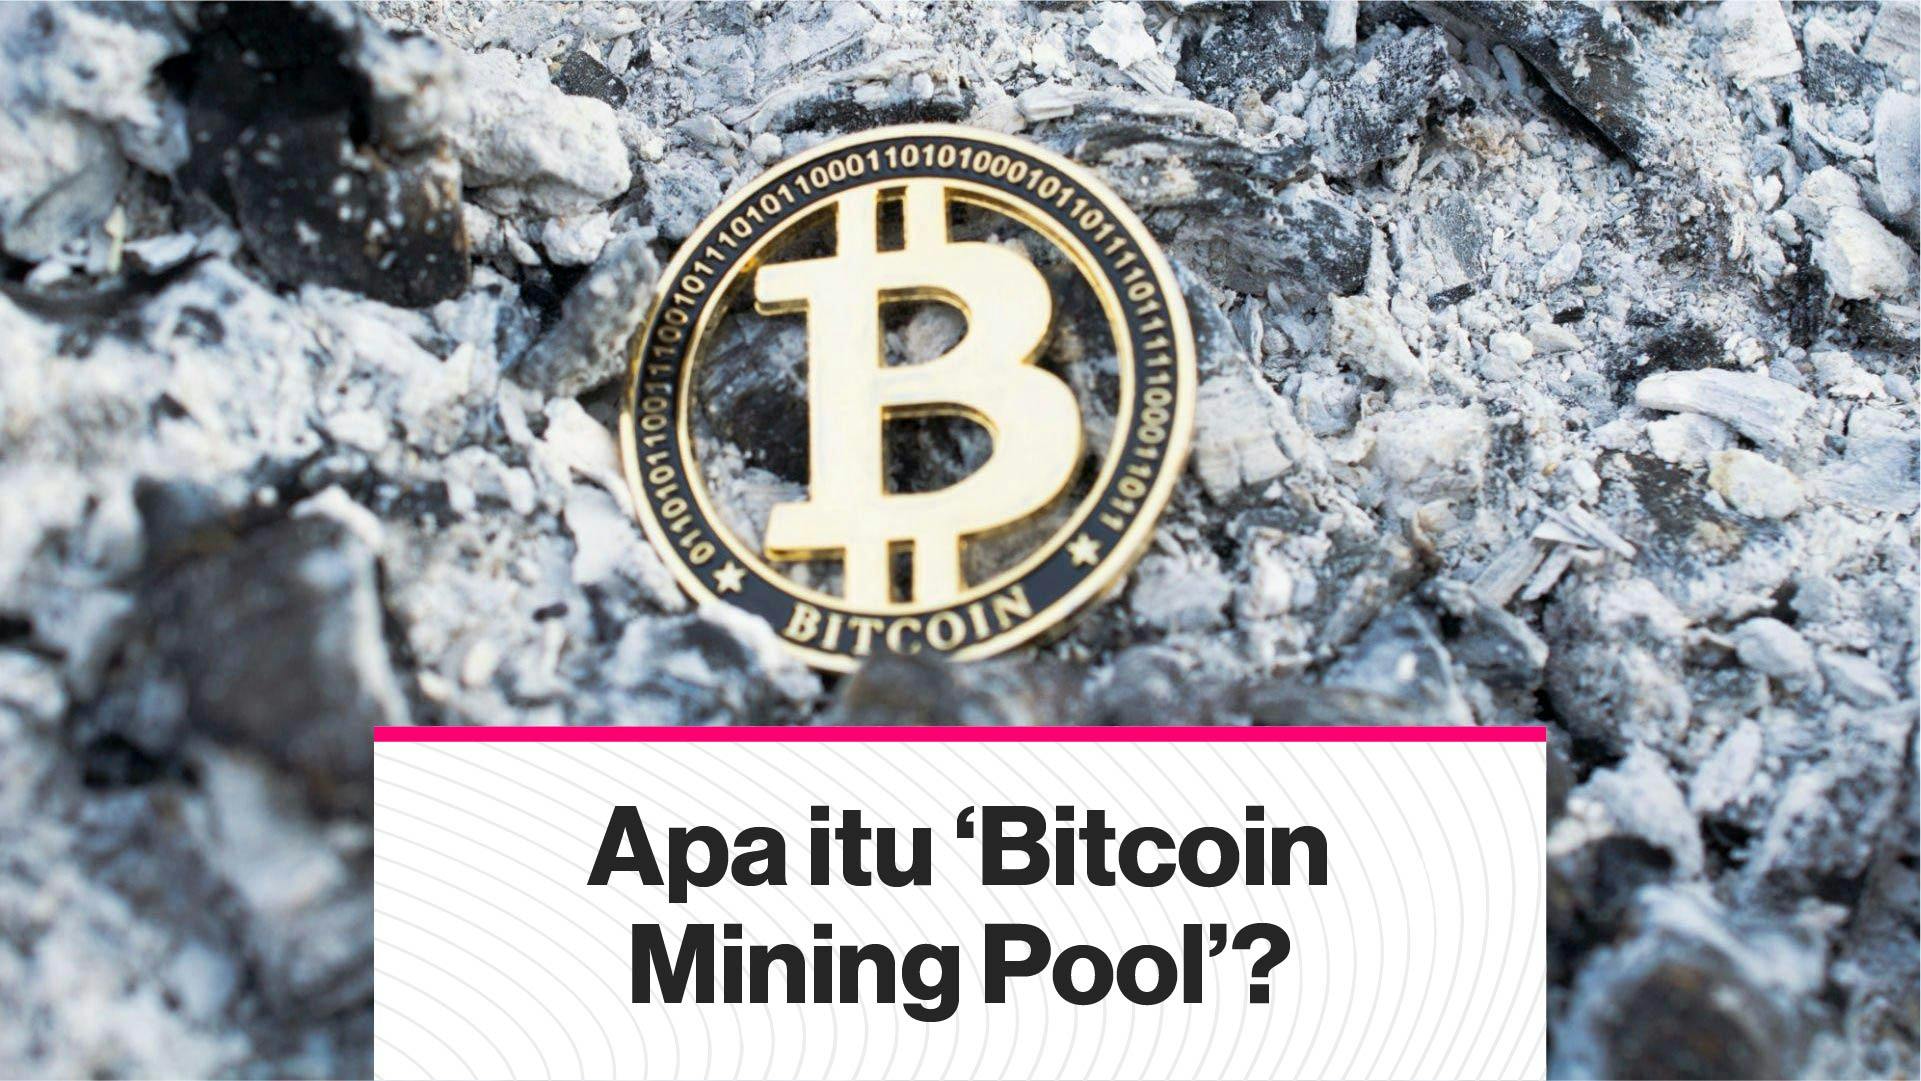 Apa itu Bitcoin Mining Pool? (Coindesk Indonesia)